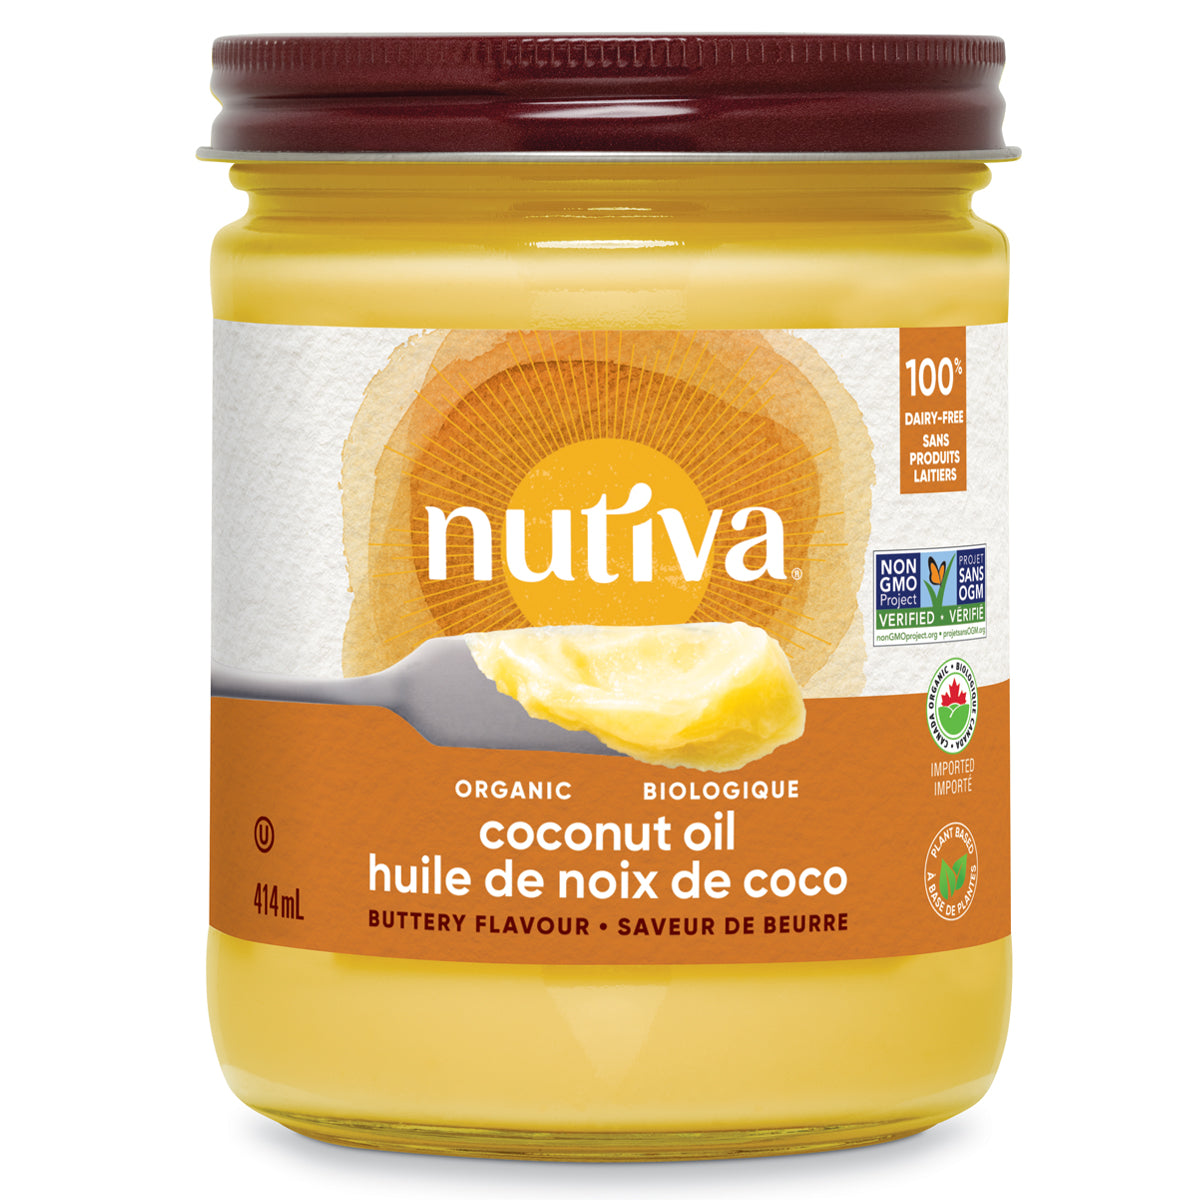 Nutiva Coconut Oil Butter Flavour Organic 414ml